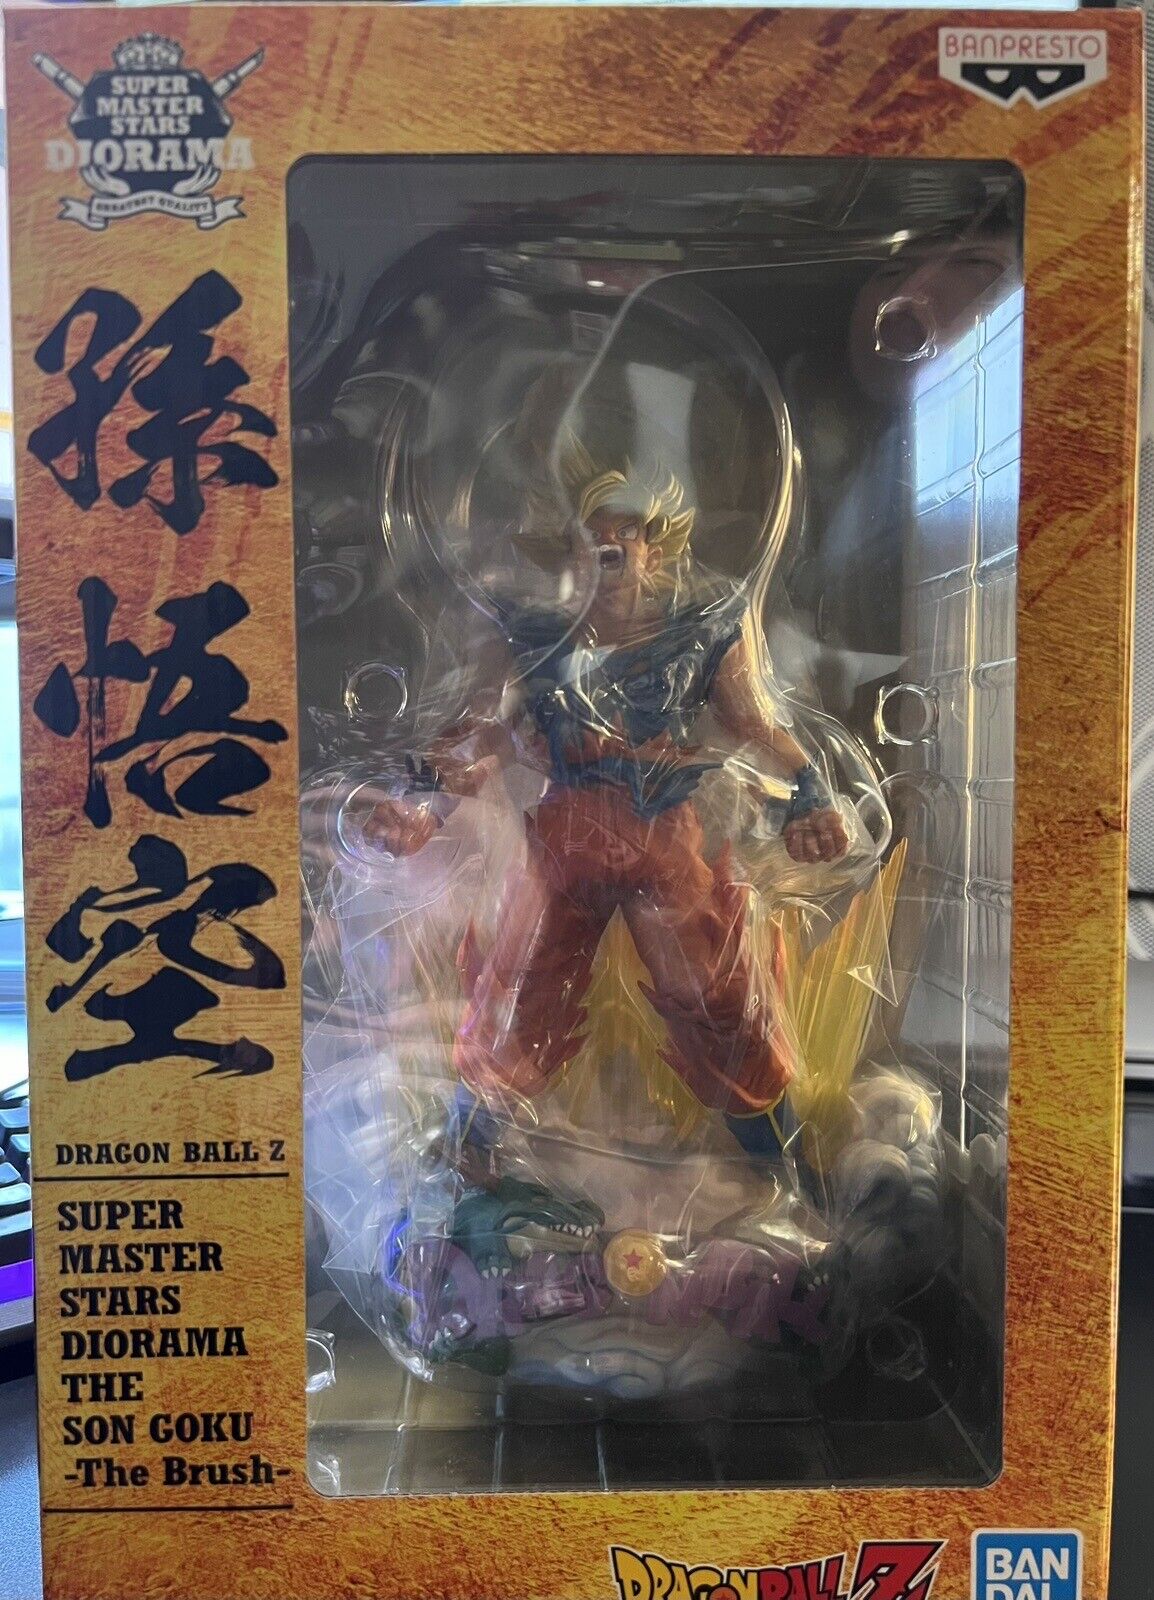 Banpresto Super Master Stars Diorama Son Goku